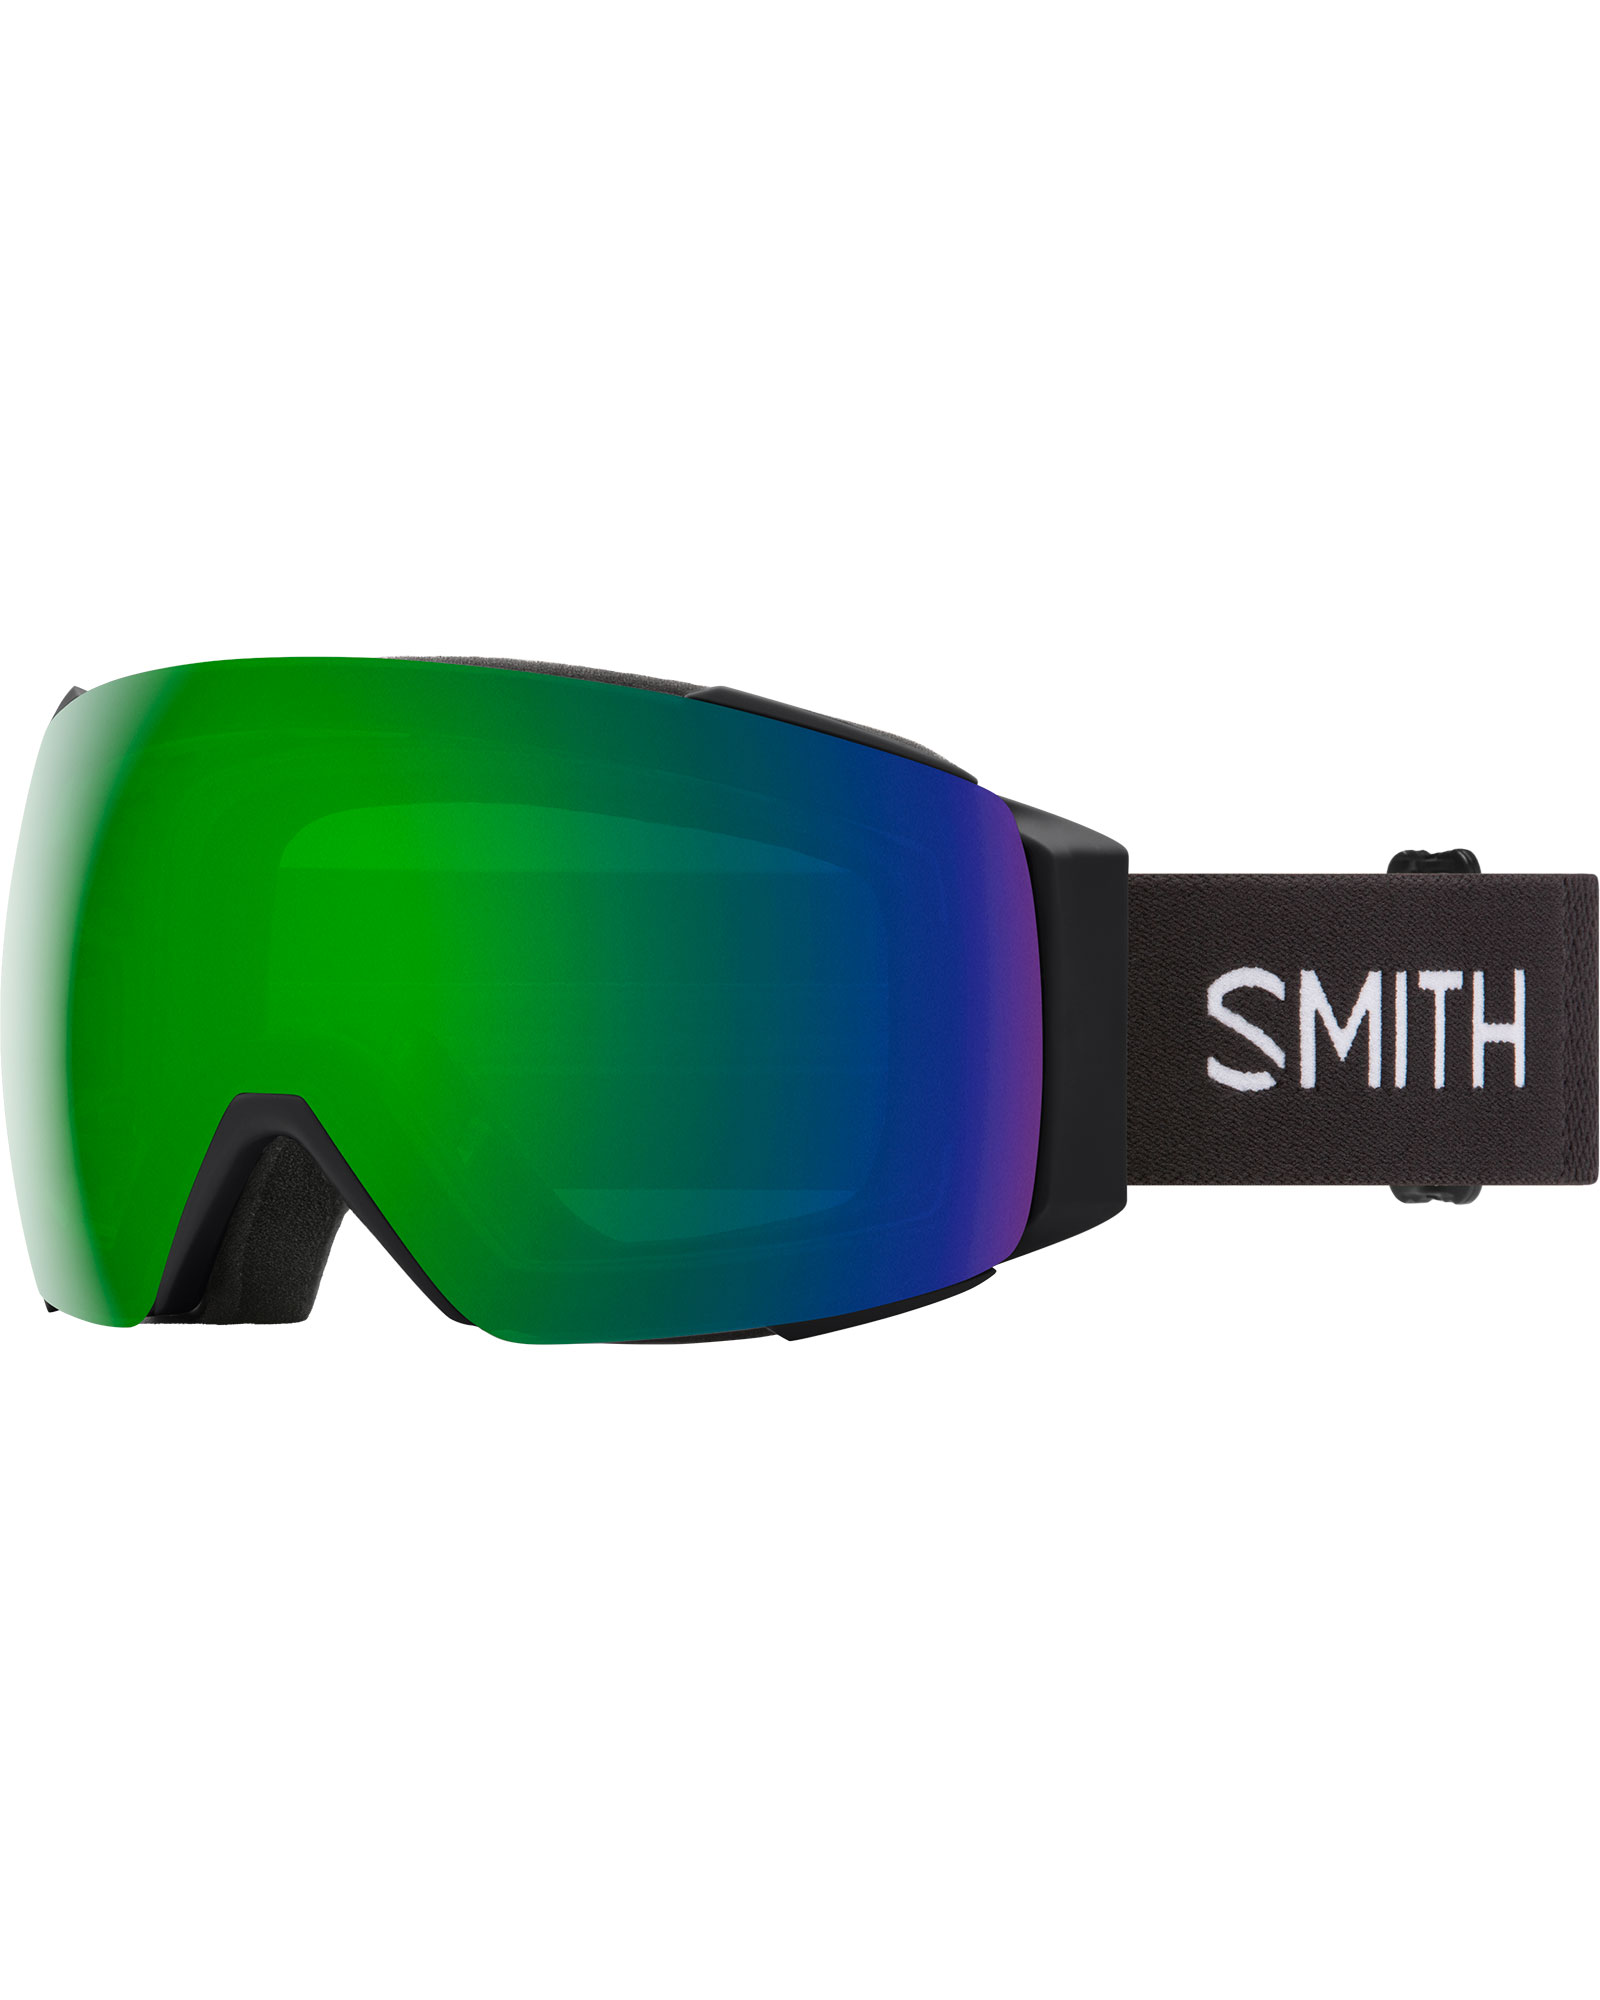 Smith I/O MAG Black / ChromaPop Sun Green Mirror + ChromaPop Storm Rose Flash Goggles 2020 / 2021 0